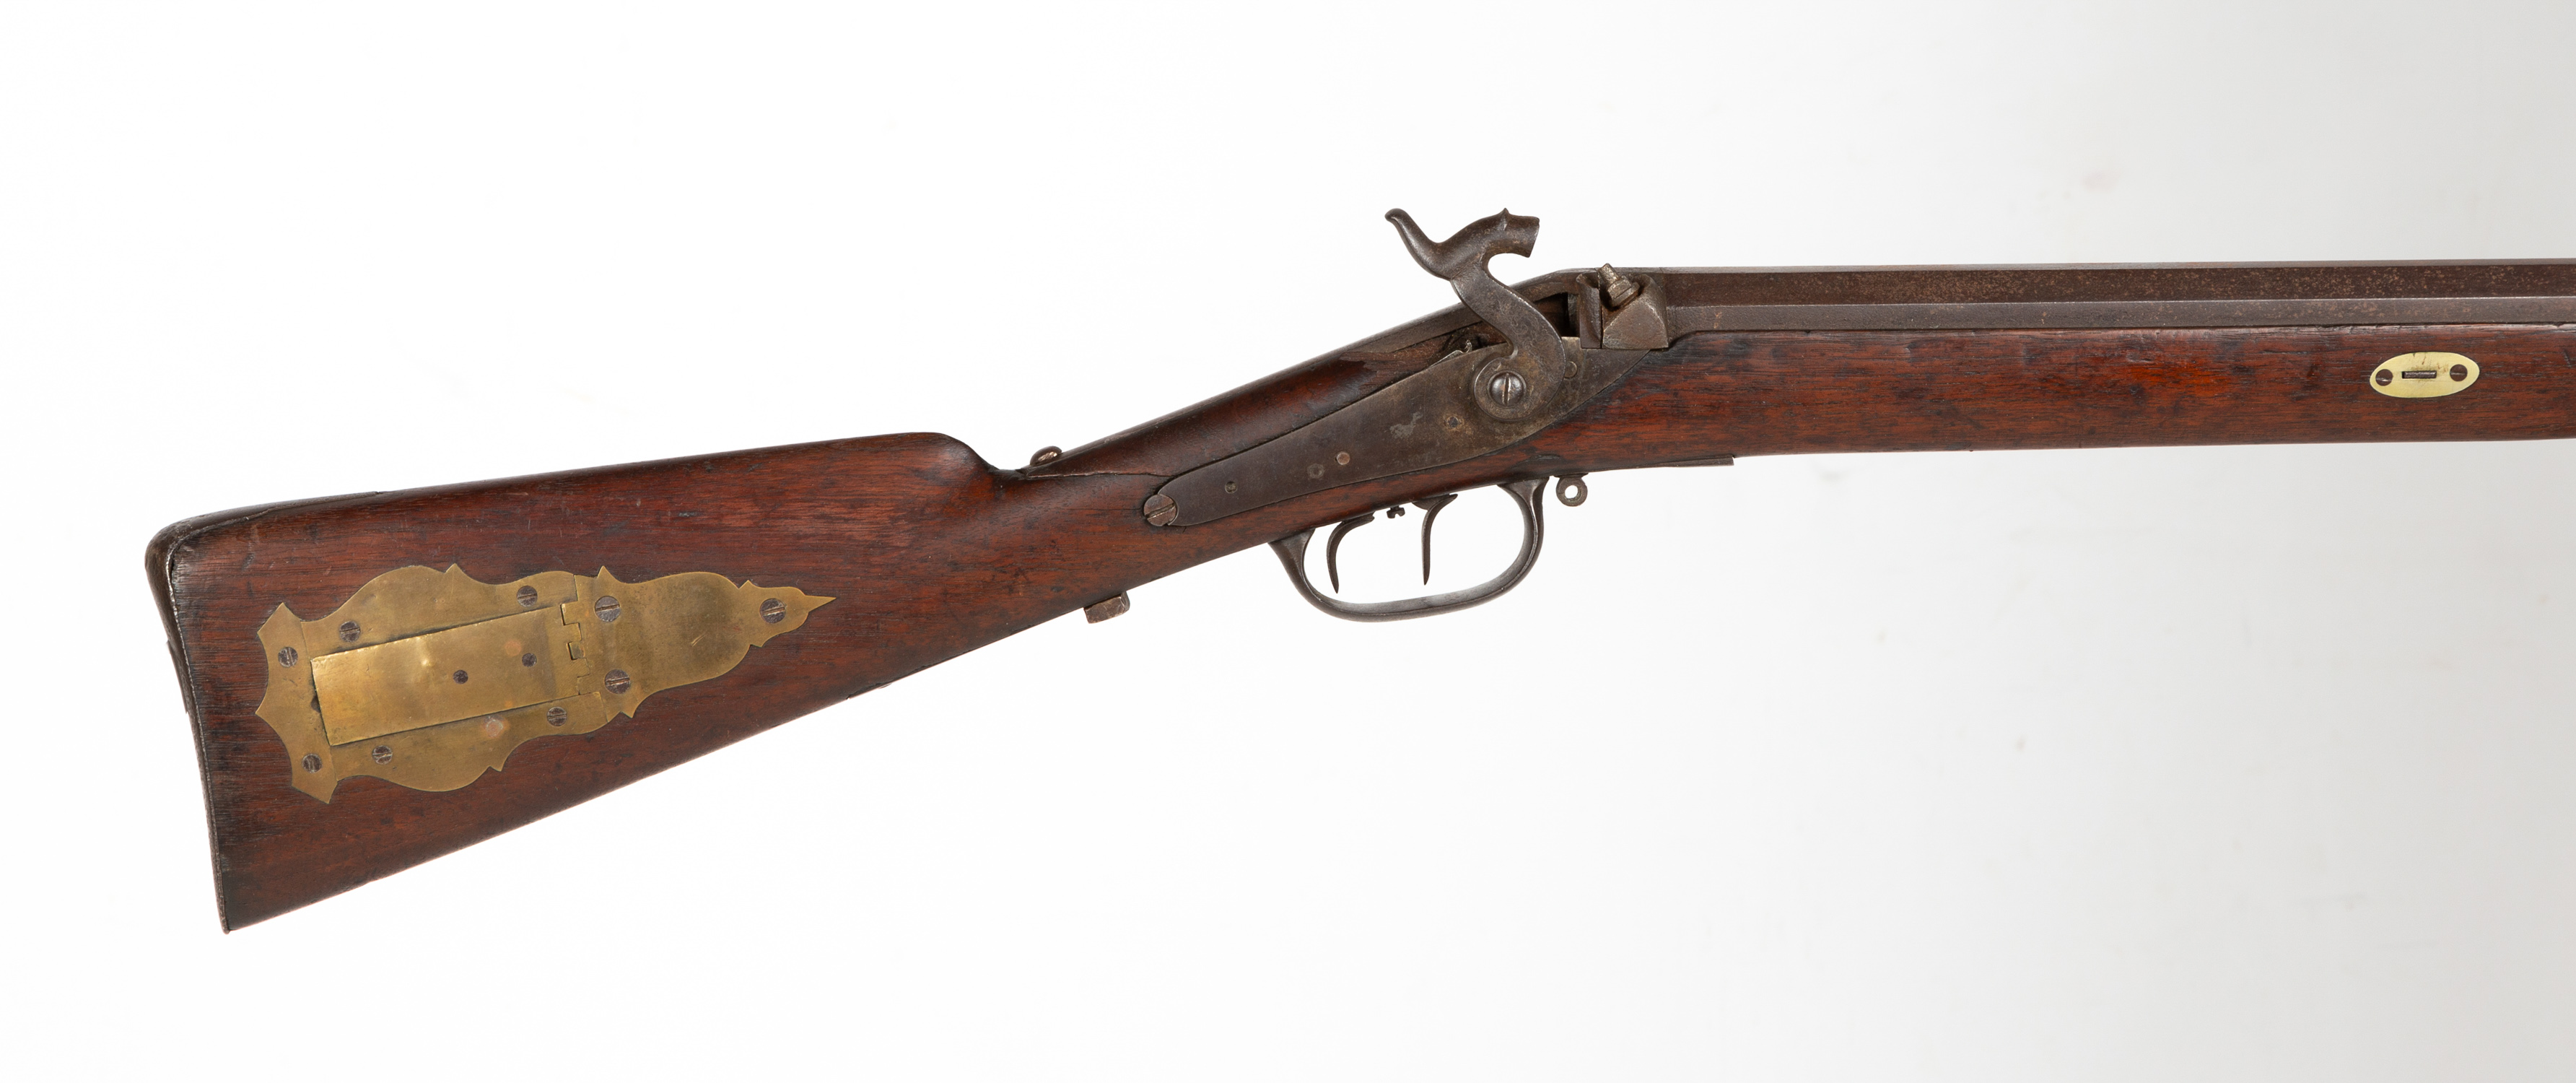 LONG GUN Mid 19th century, barrel